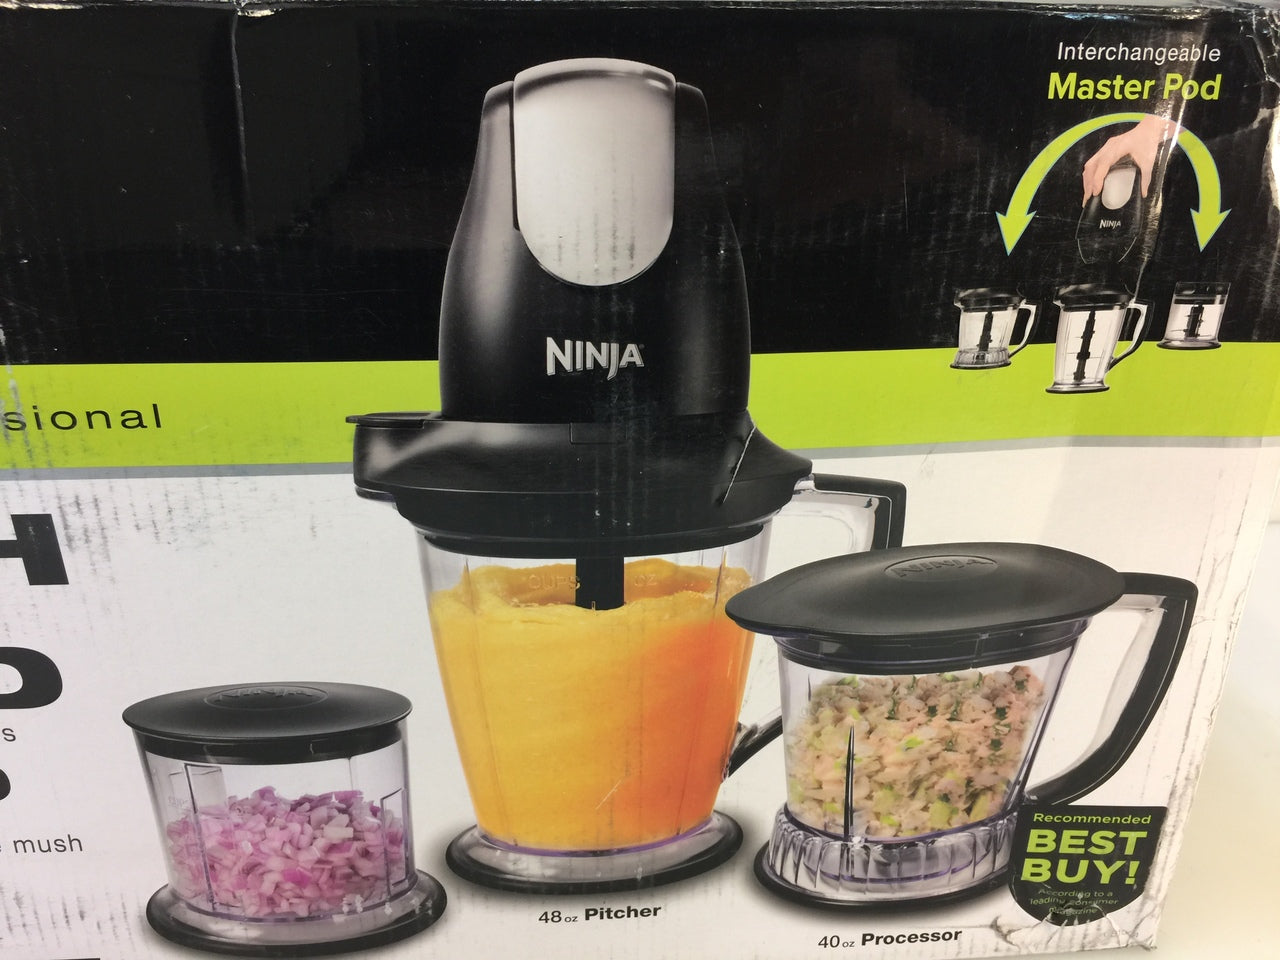 Product Review - Ninja Master Prep Professional Food & Drink Maker 